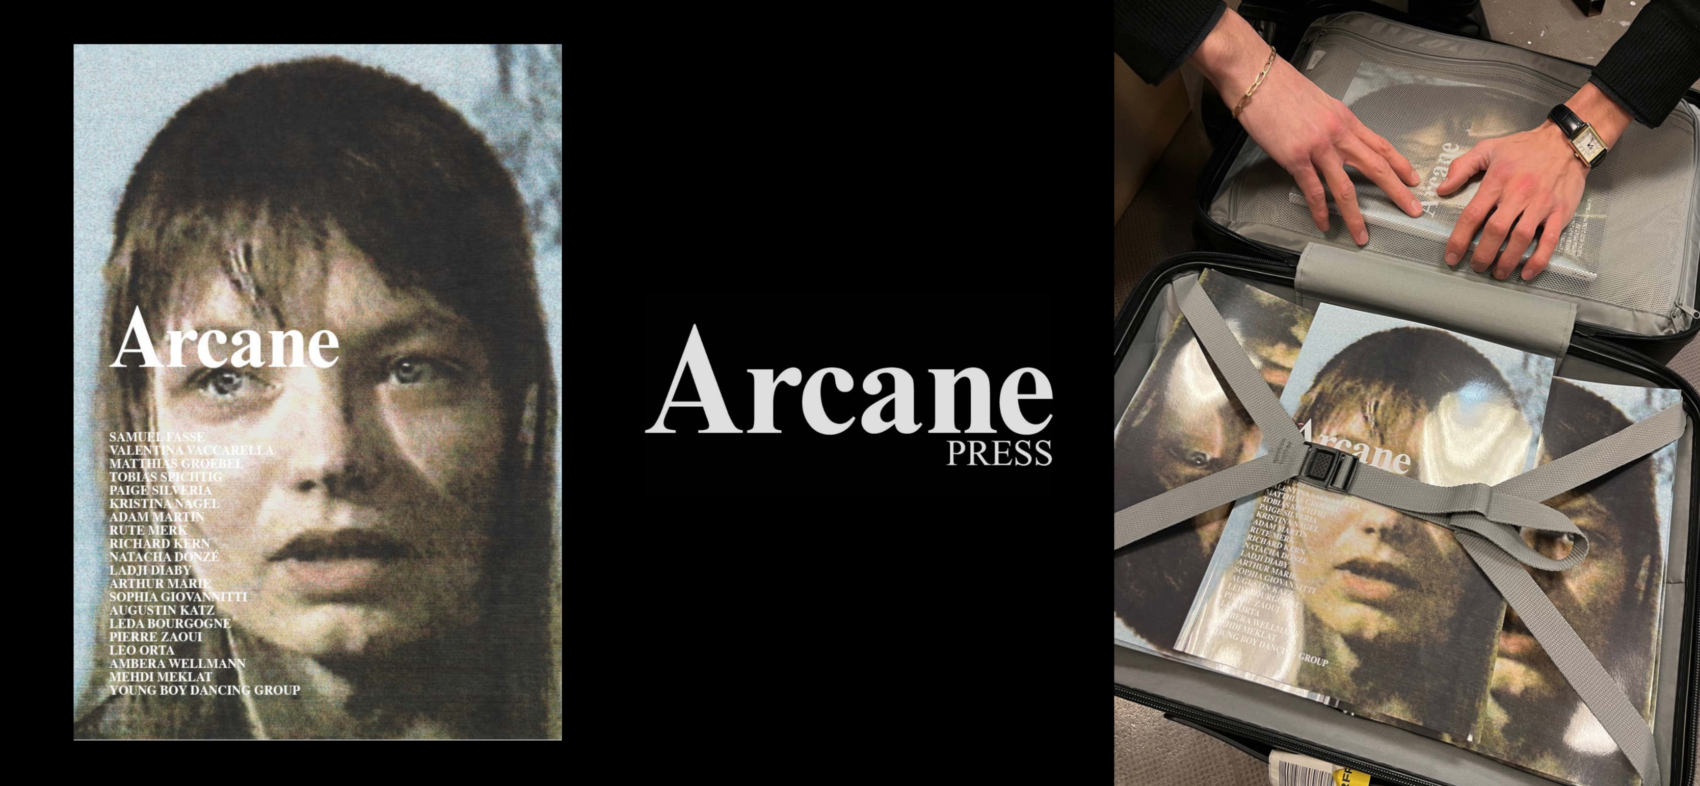 Arcane press - Paris Ass Book Fair